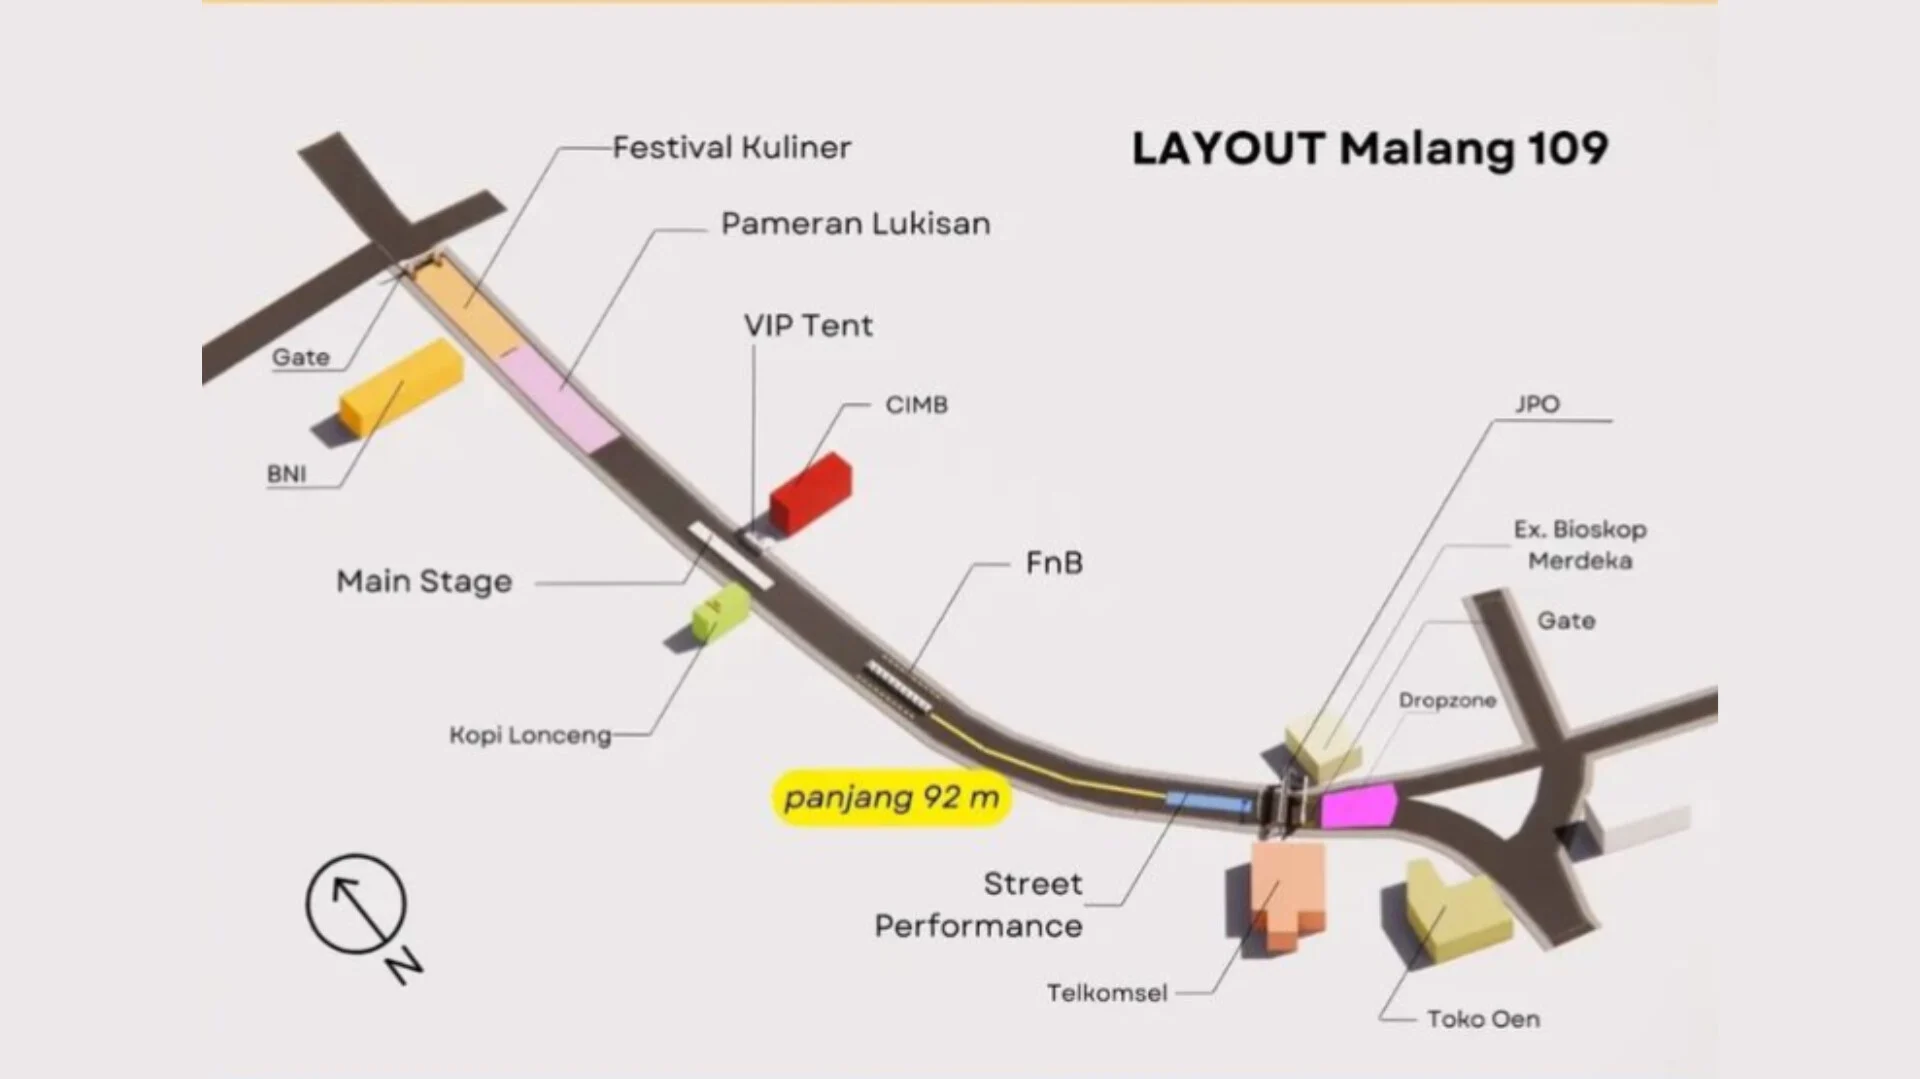 Rute Alternatif Menghindari Kemacetan saat Event Malang 109